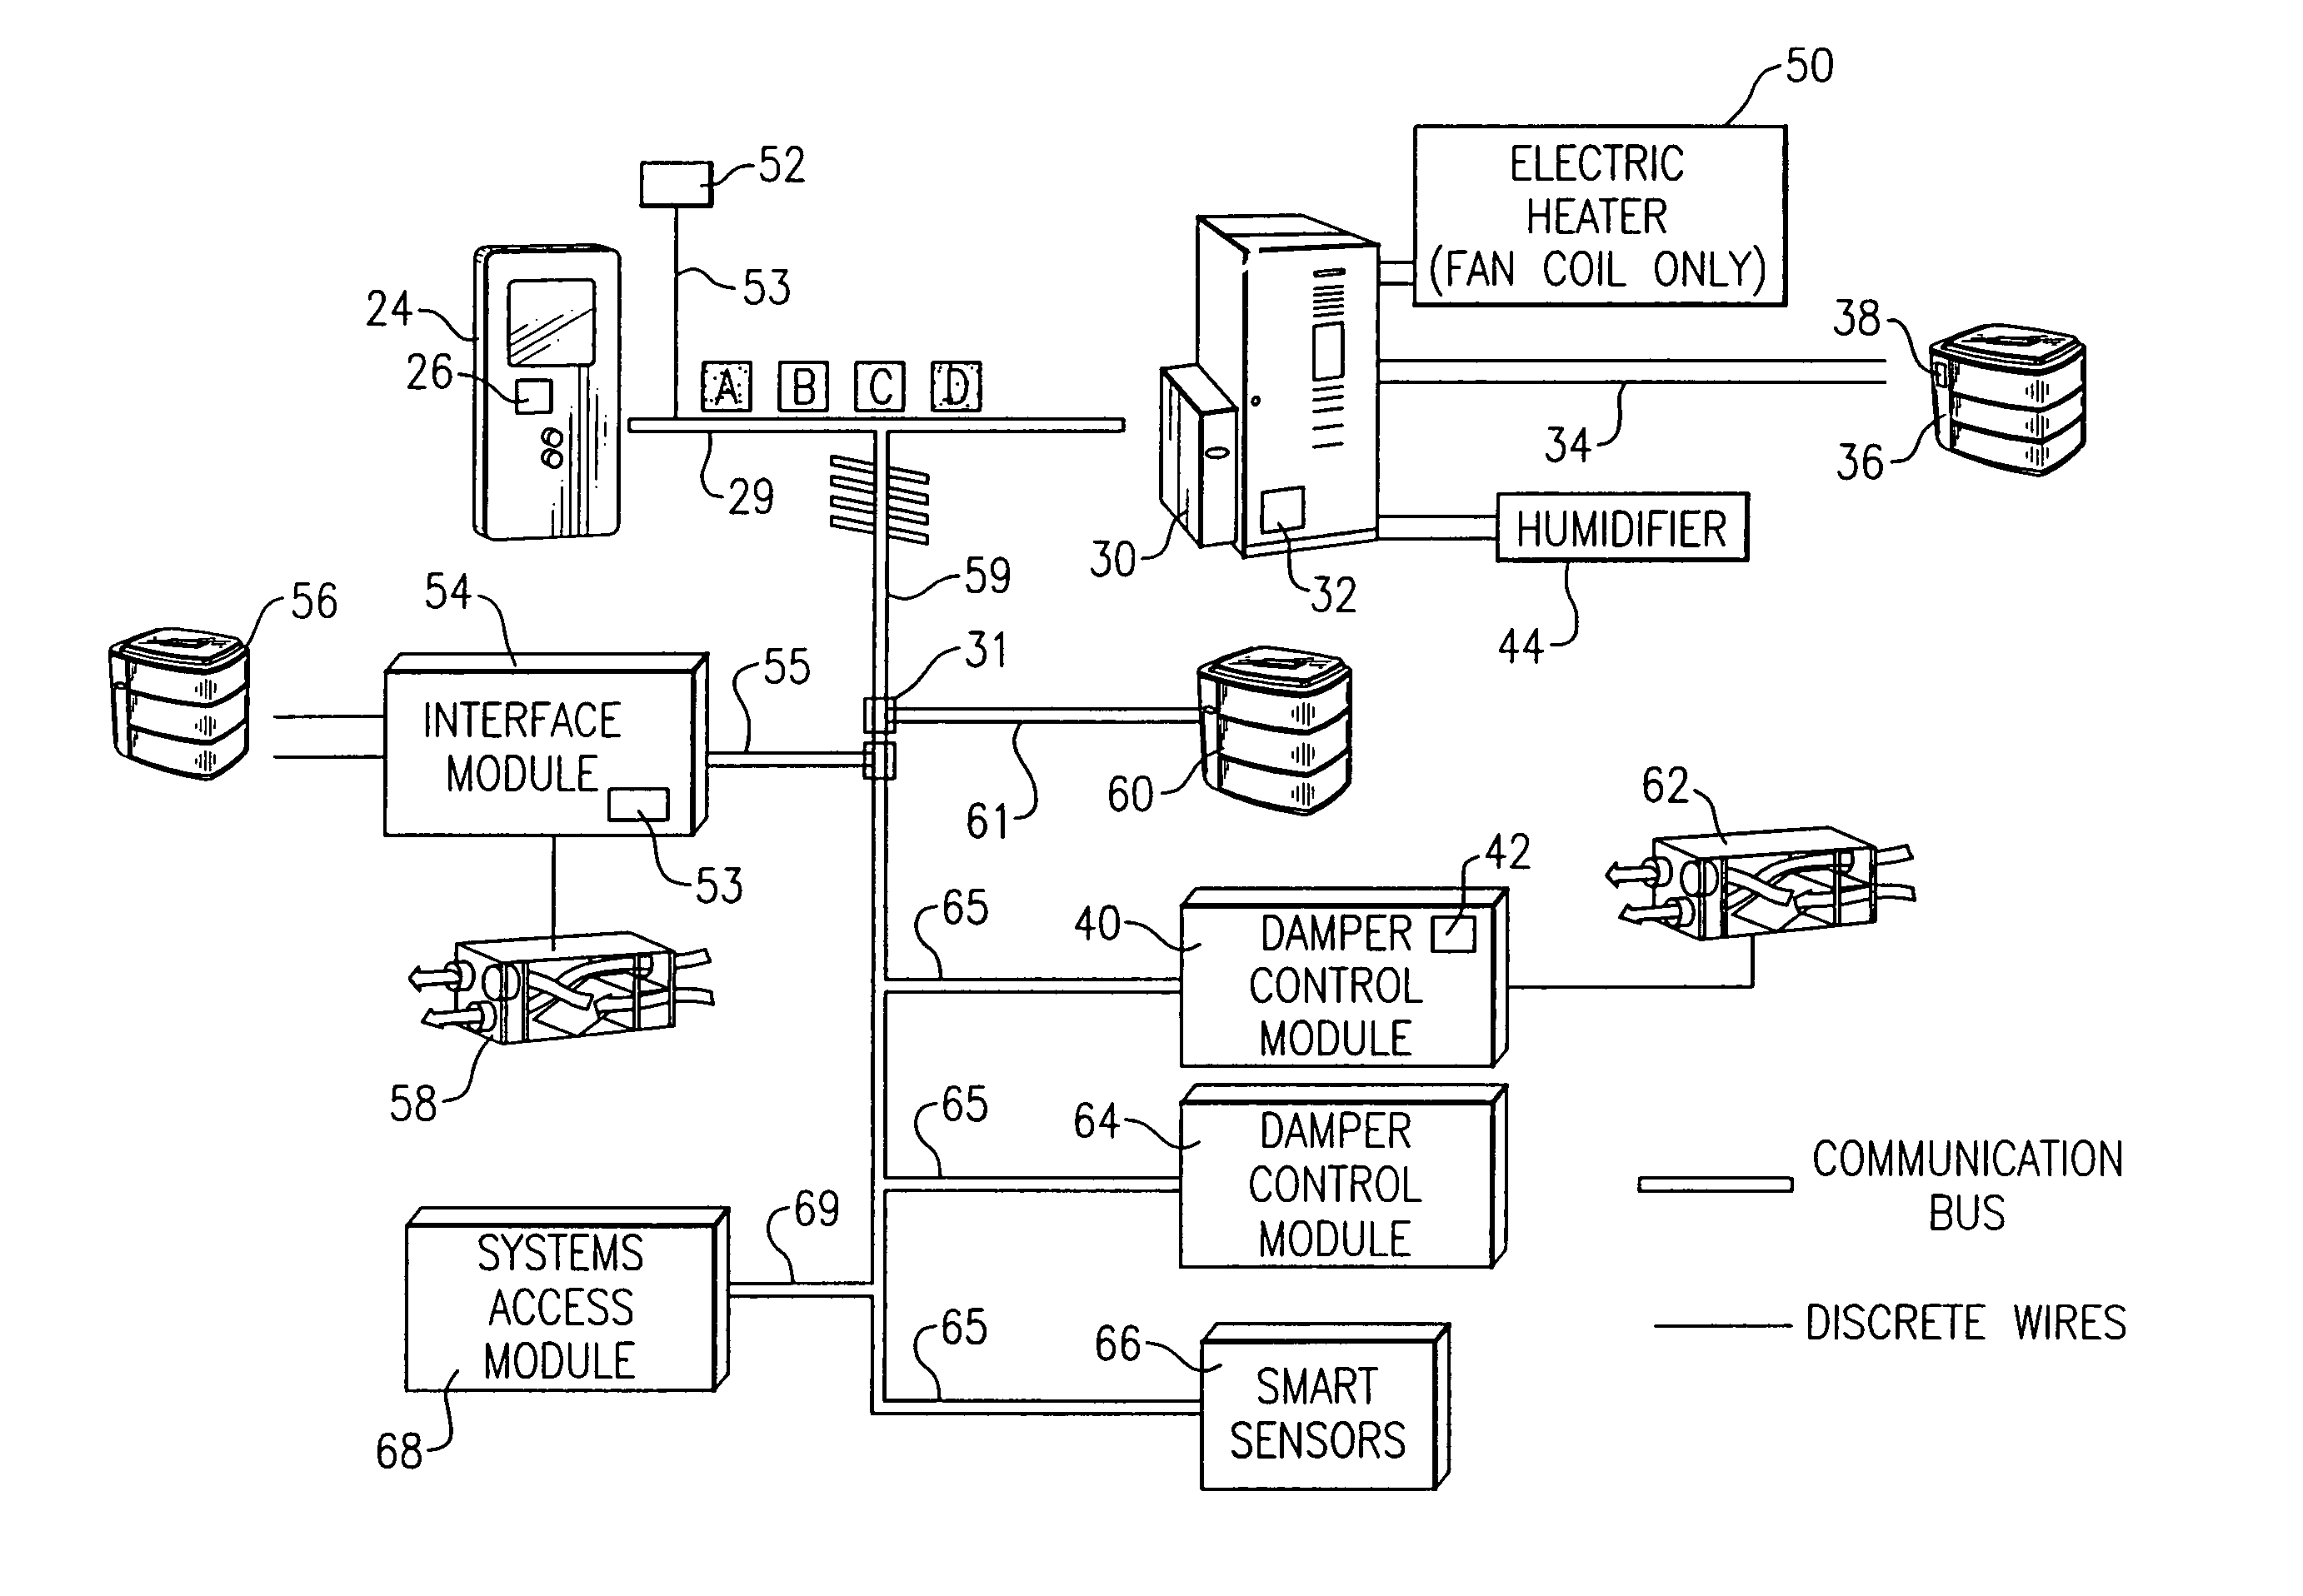 Serial communicating HVAC system